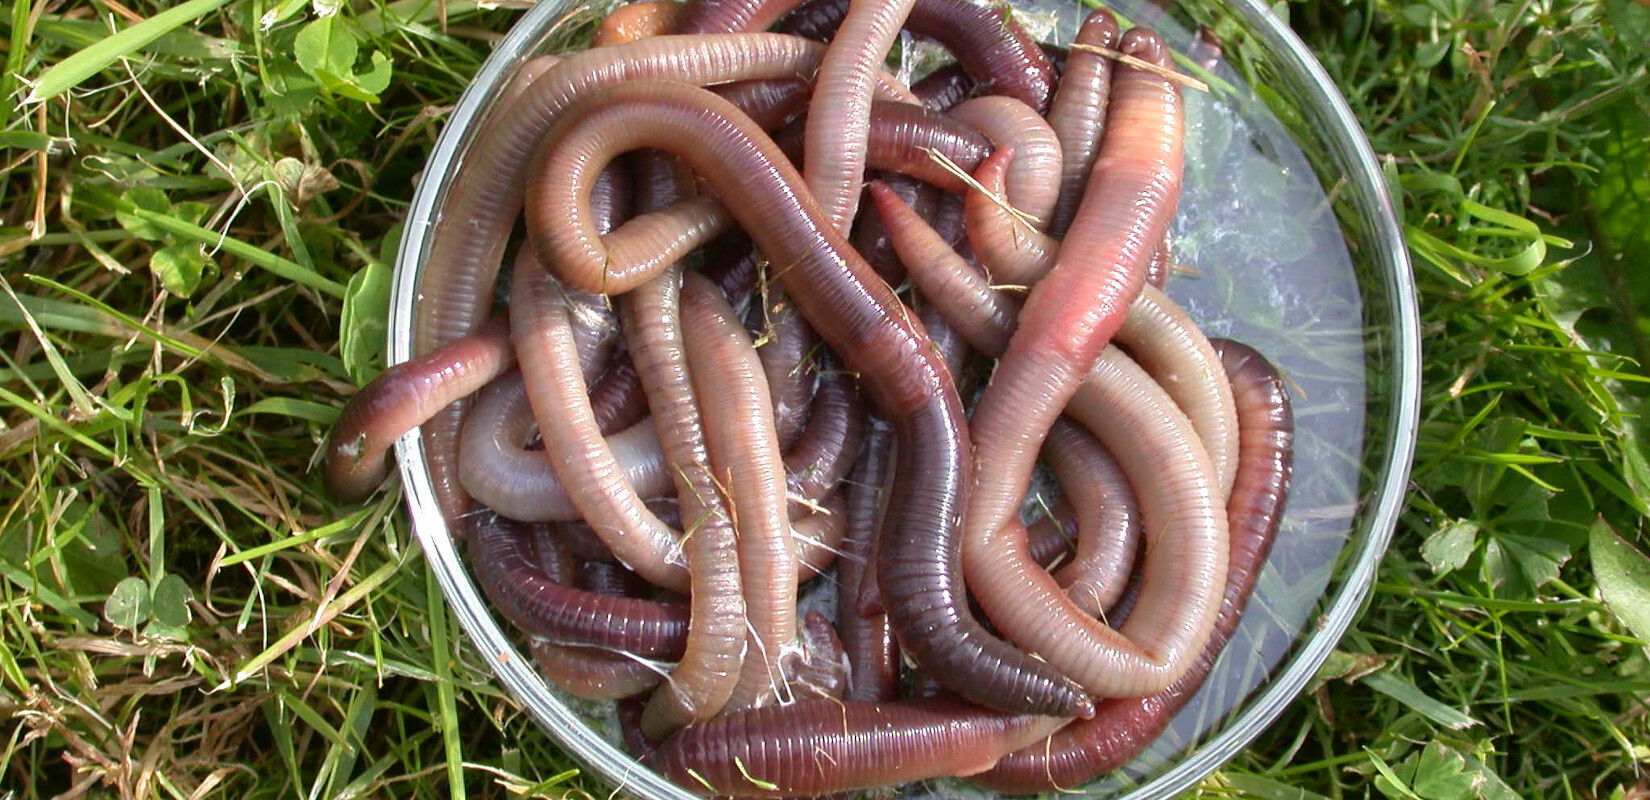 Earthworms in a petri dish